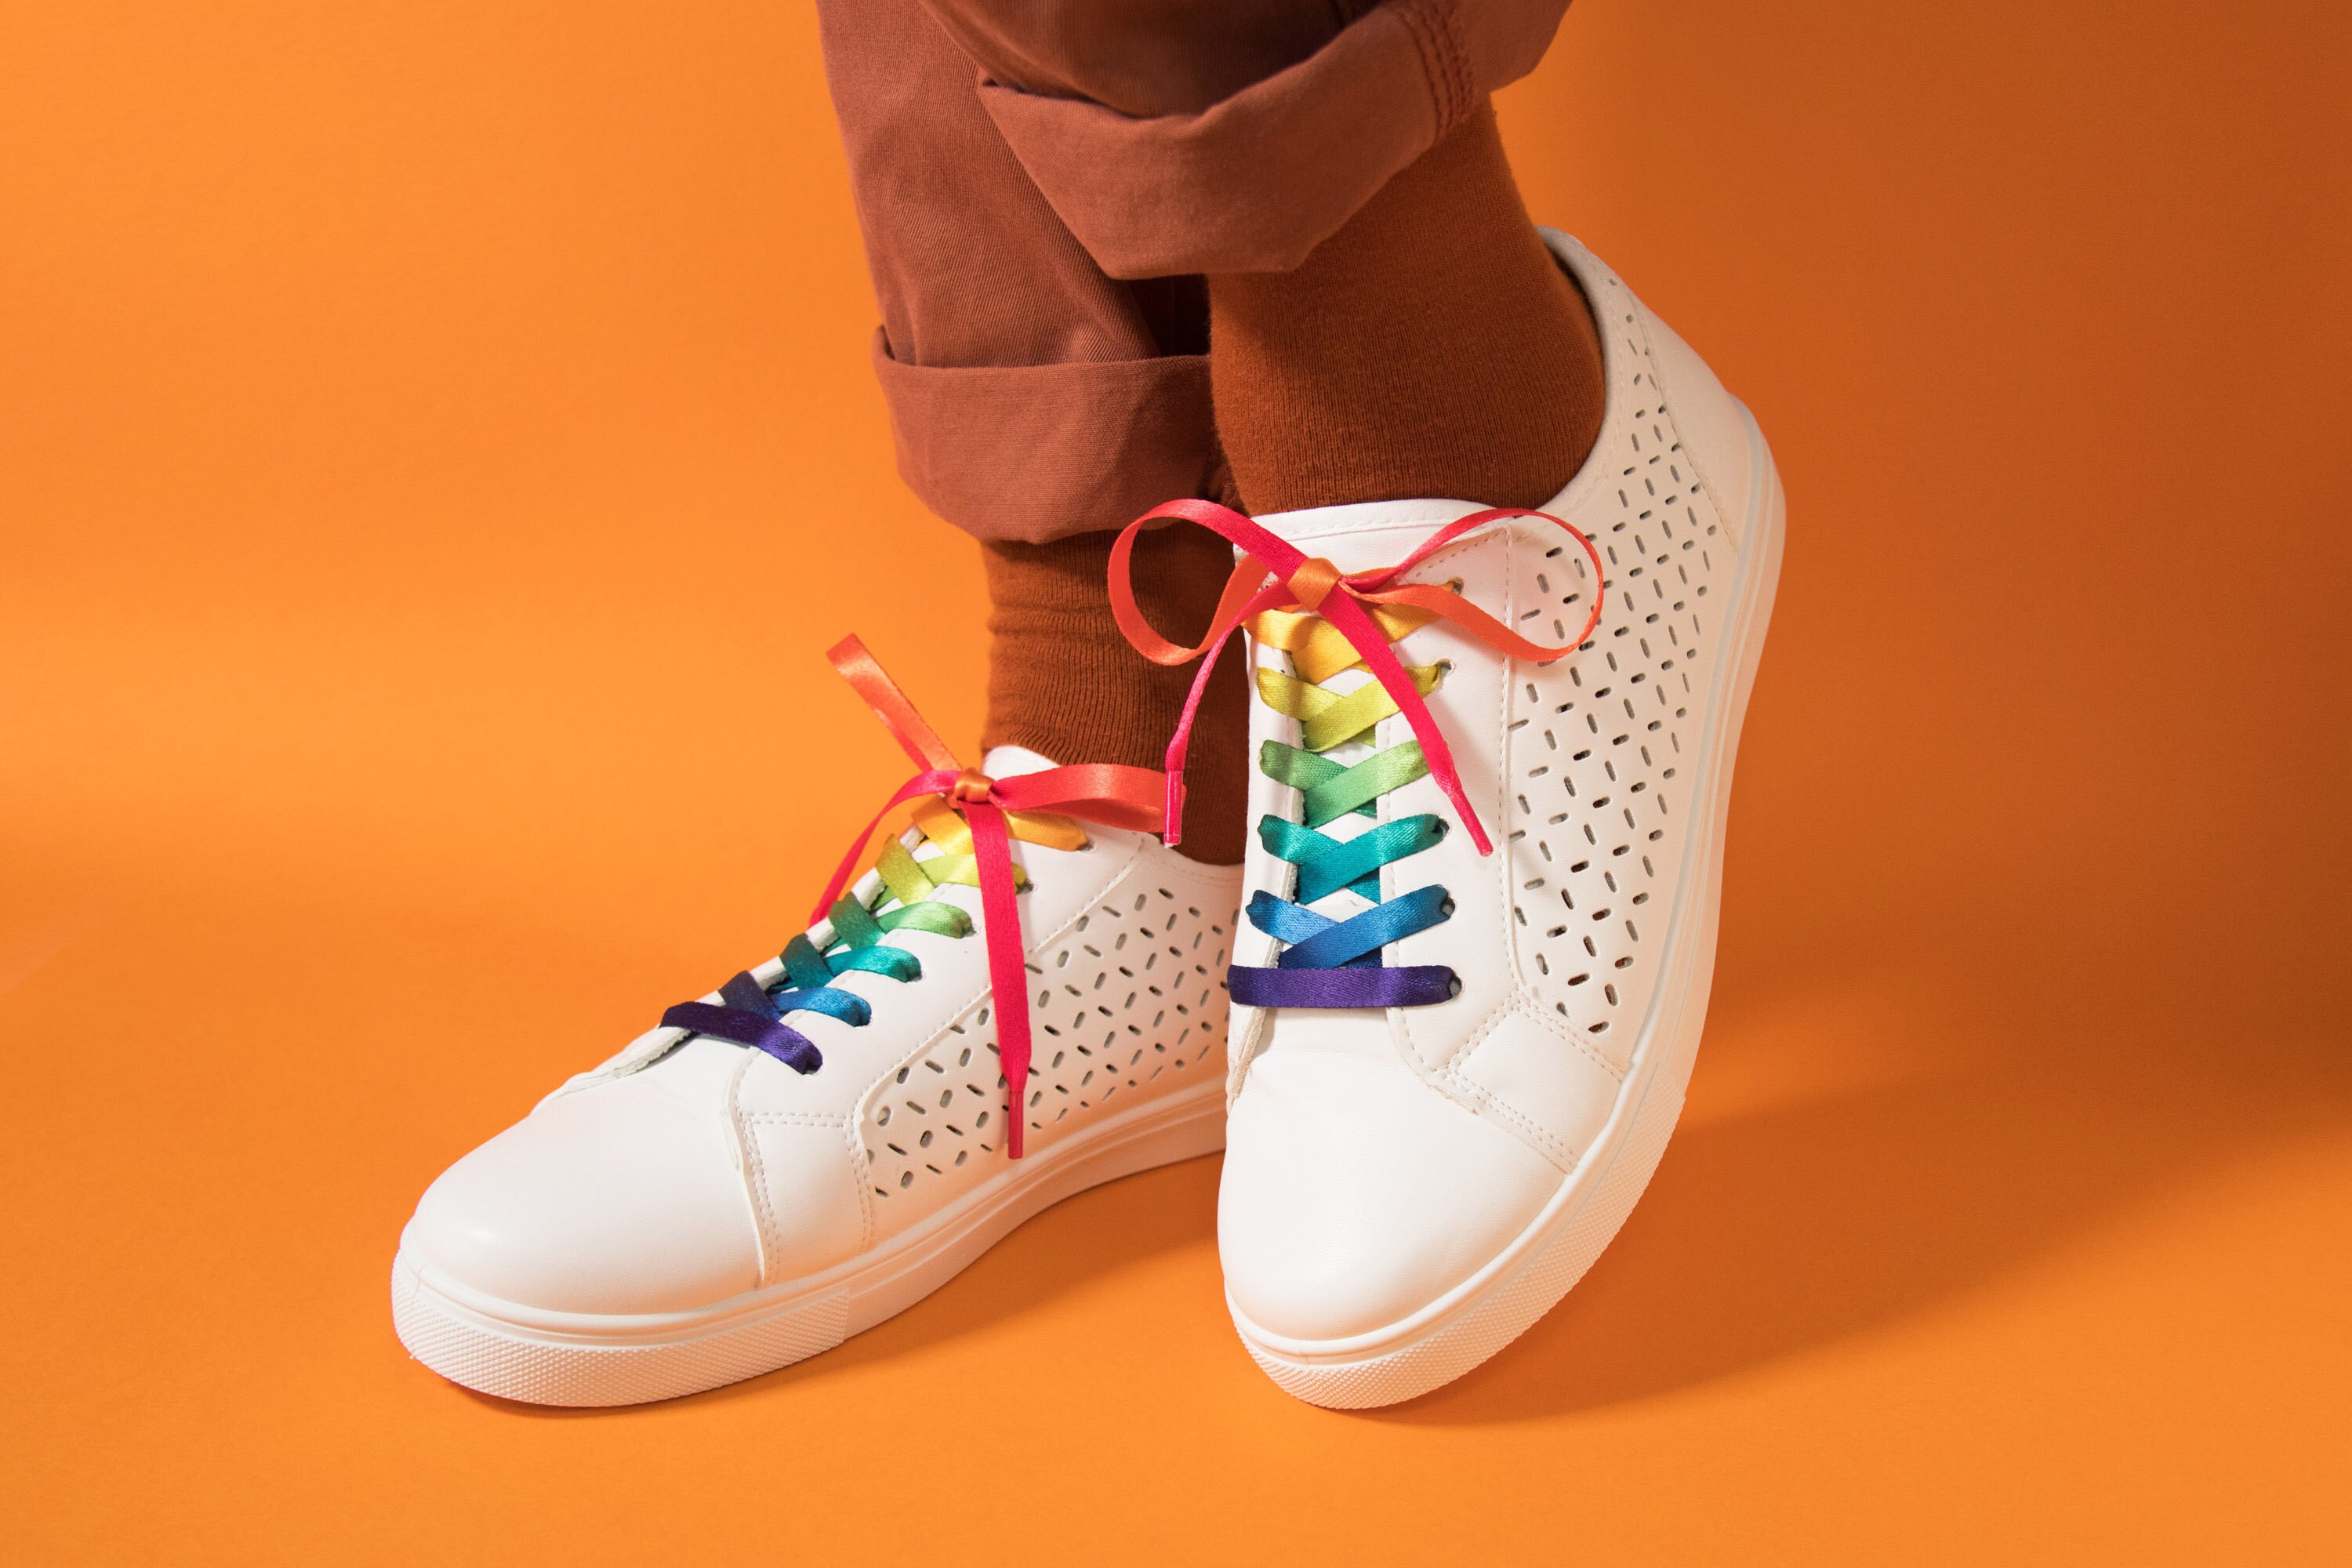 rainbow pride shoelaces